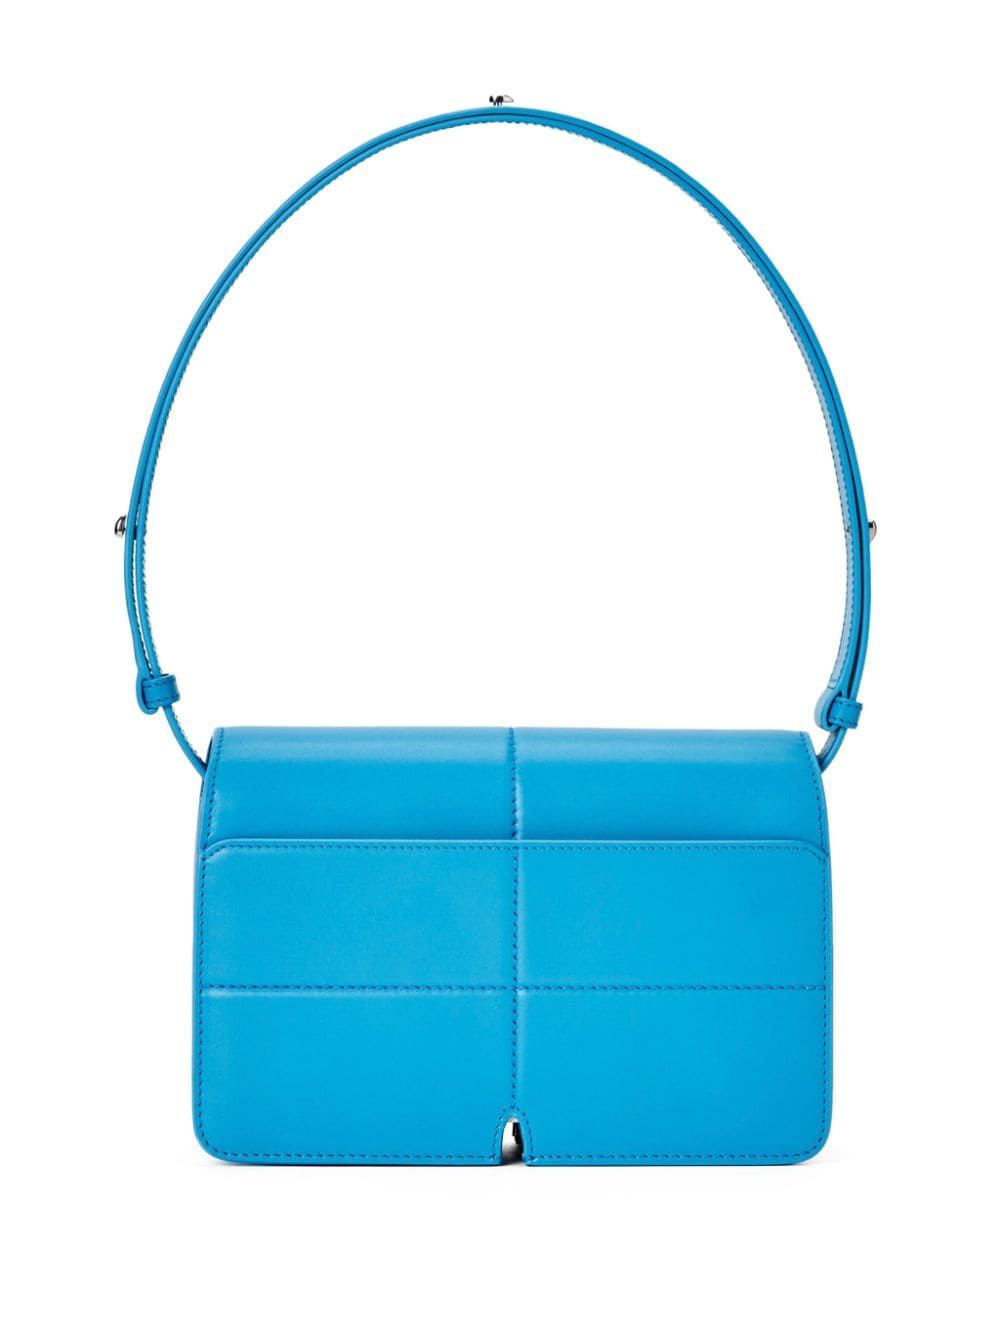 Burberry leather shoulder bag - Blauw